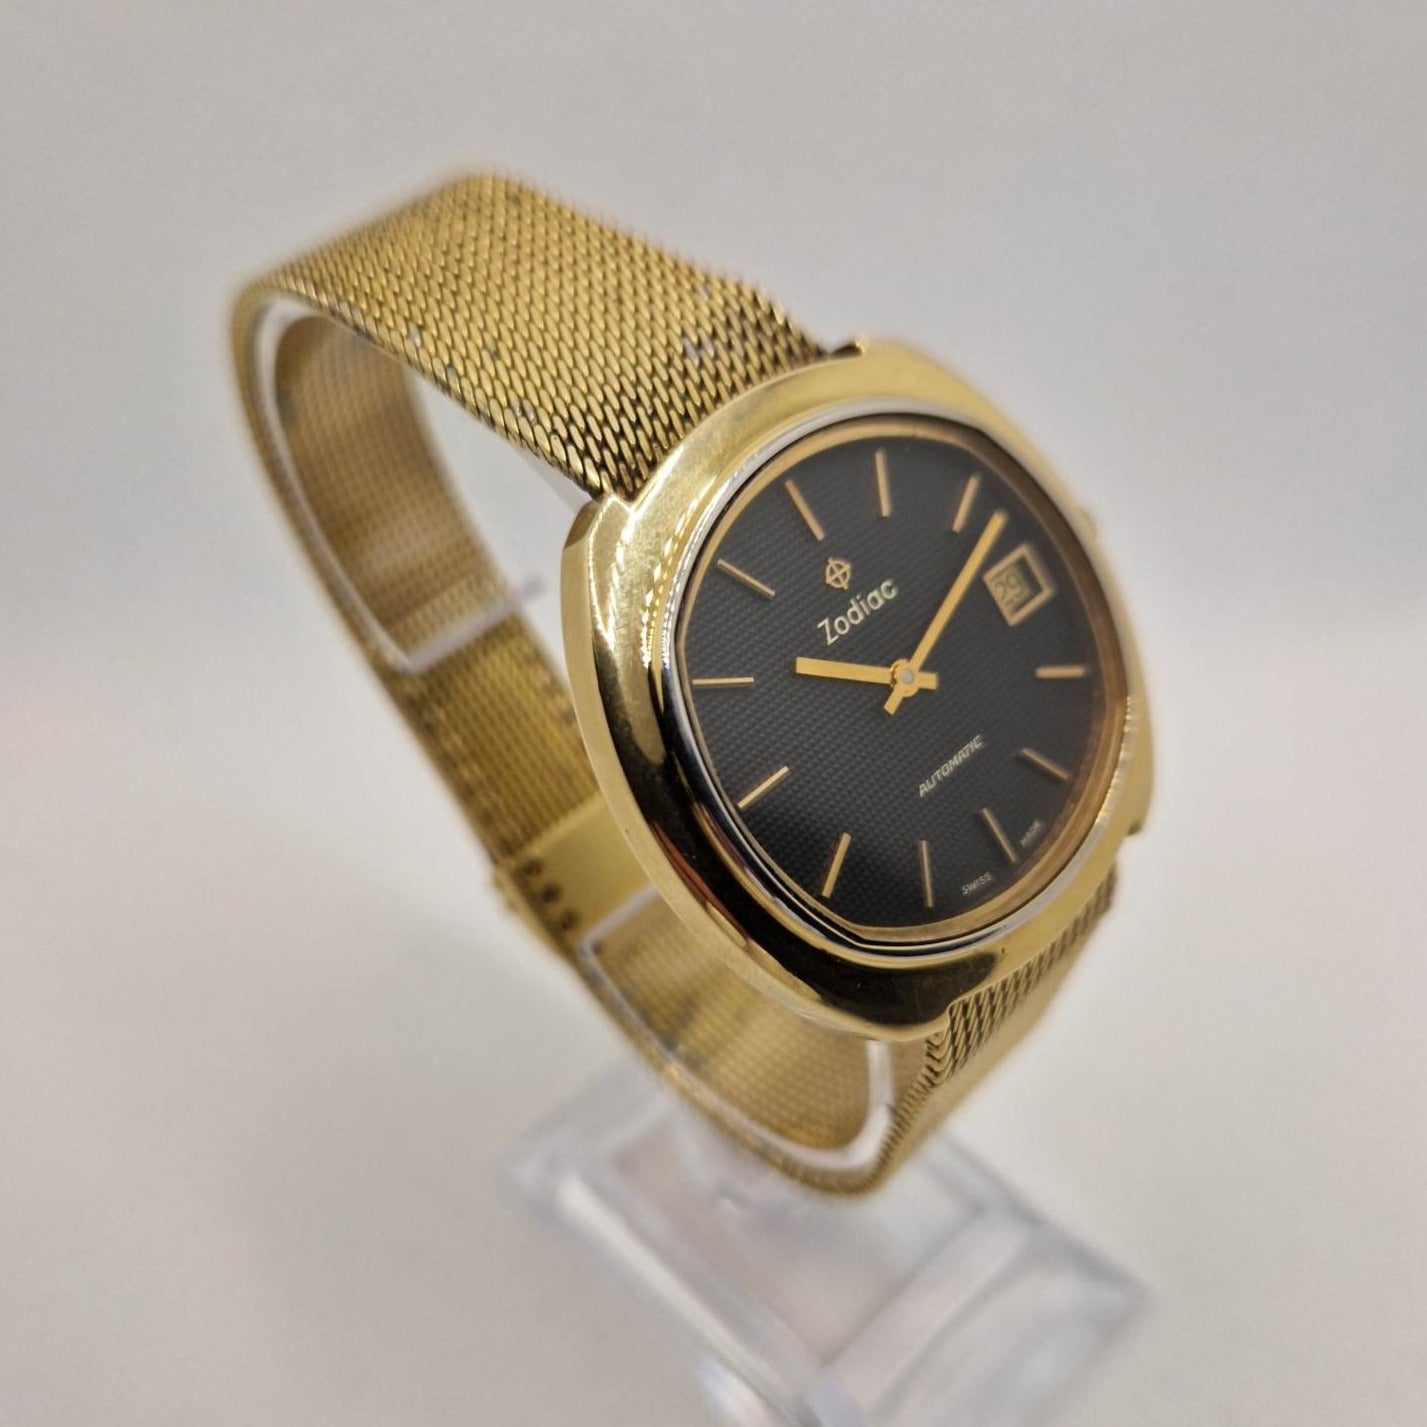 Vintage Zodiac Gold Watch Cal. LTD 104 2892, 1960s Swiss Luxury Timepiece, Tapisserie Dial, 21 Jewels, Automatic Movement, Men's Dress/Formal Watch